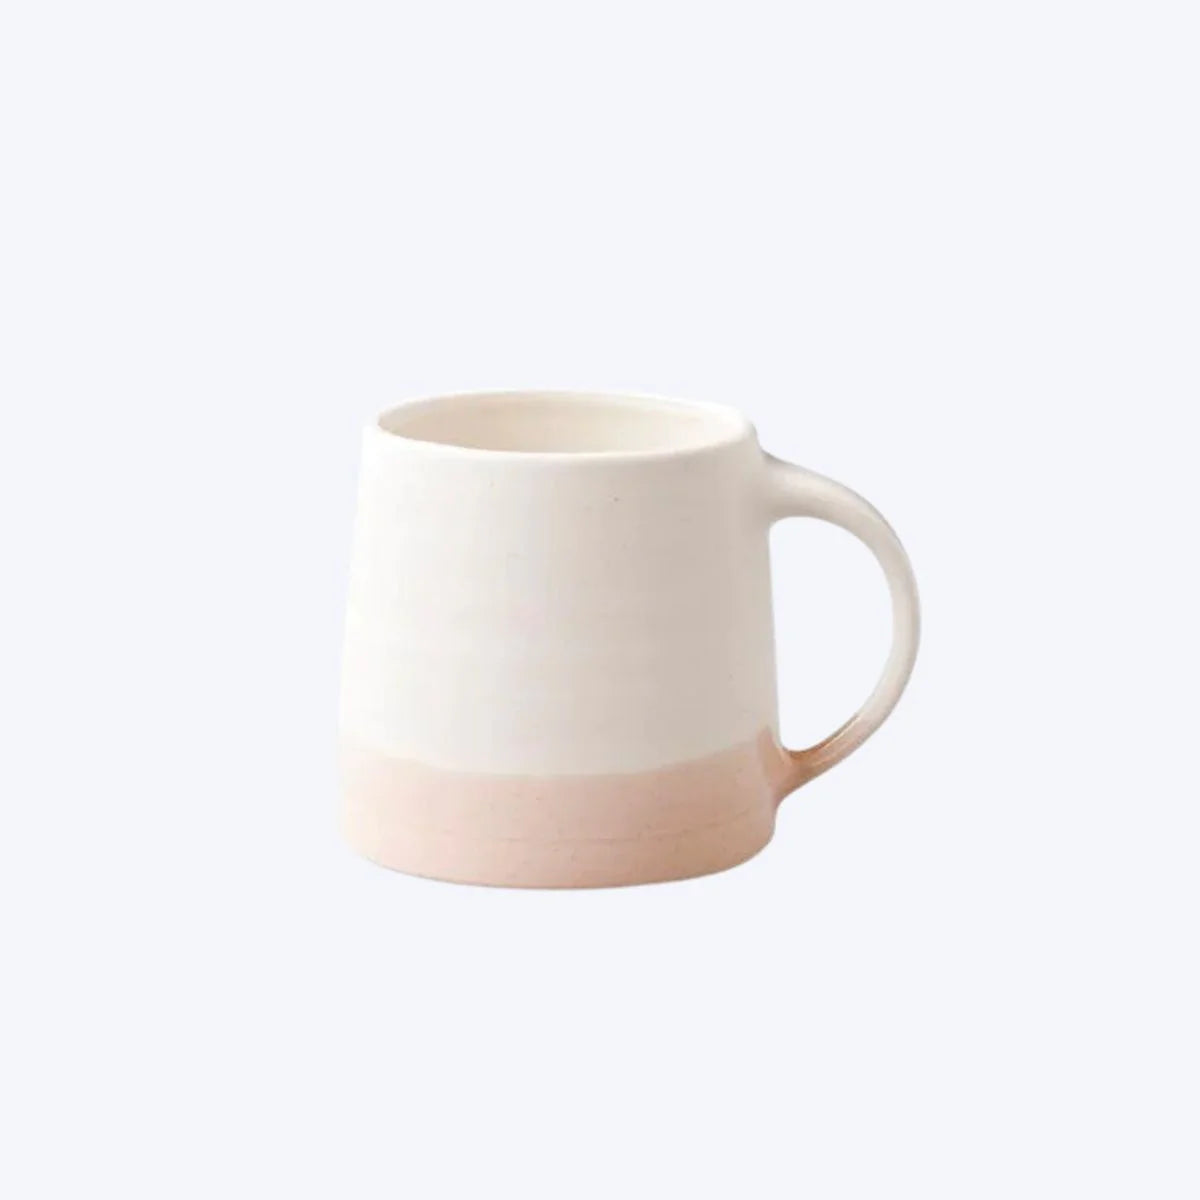 Kinto ceramic mug in beige white color scheme